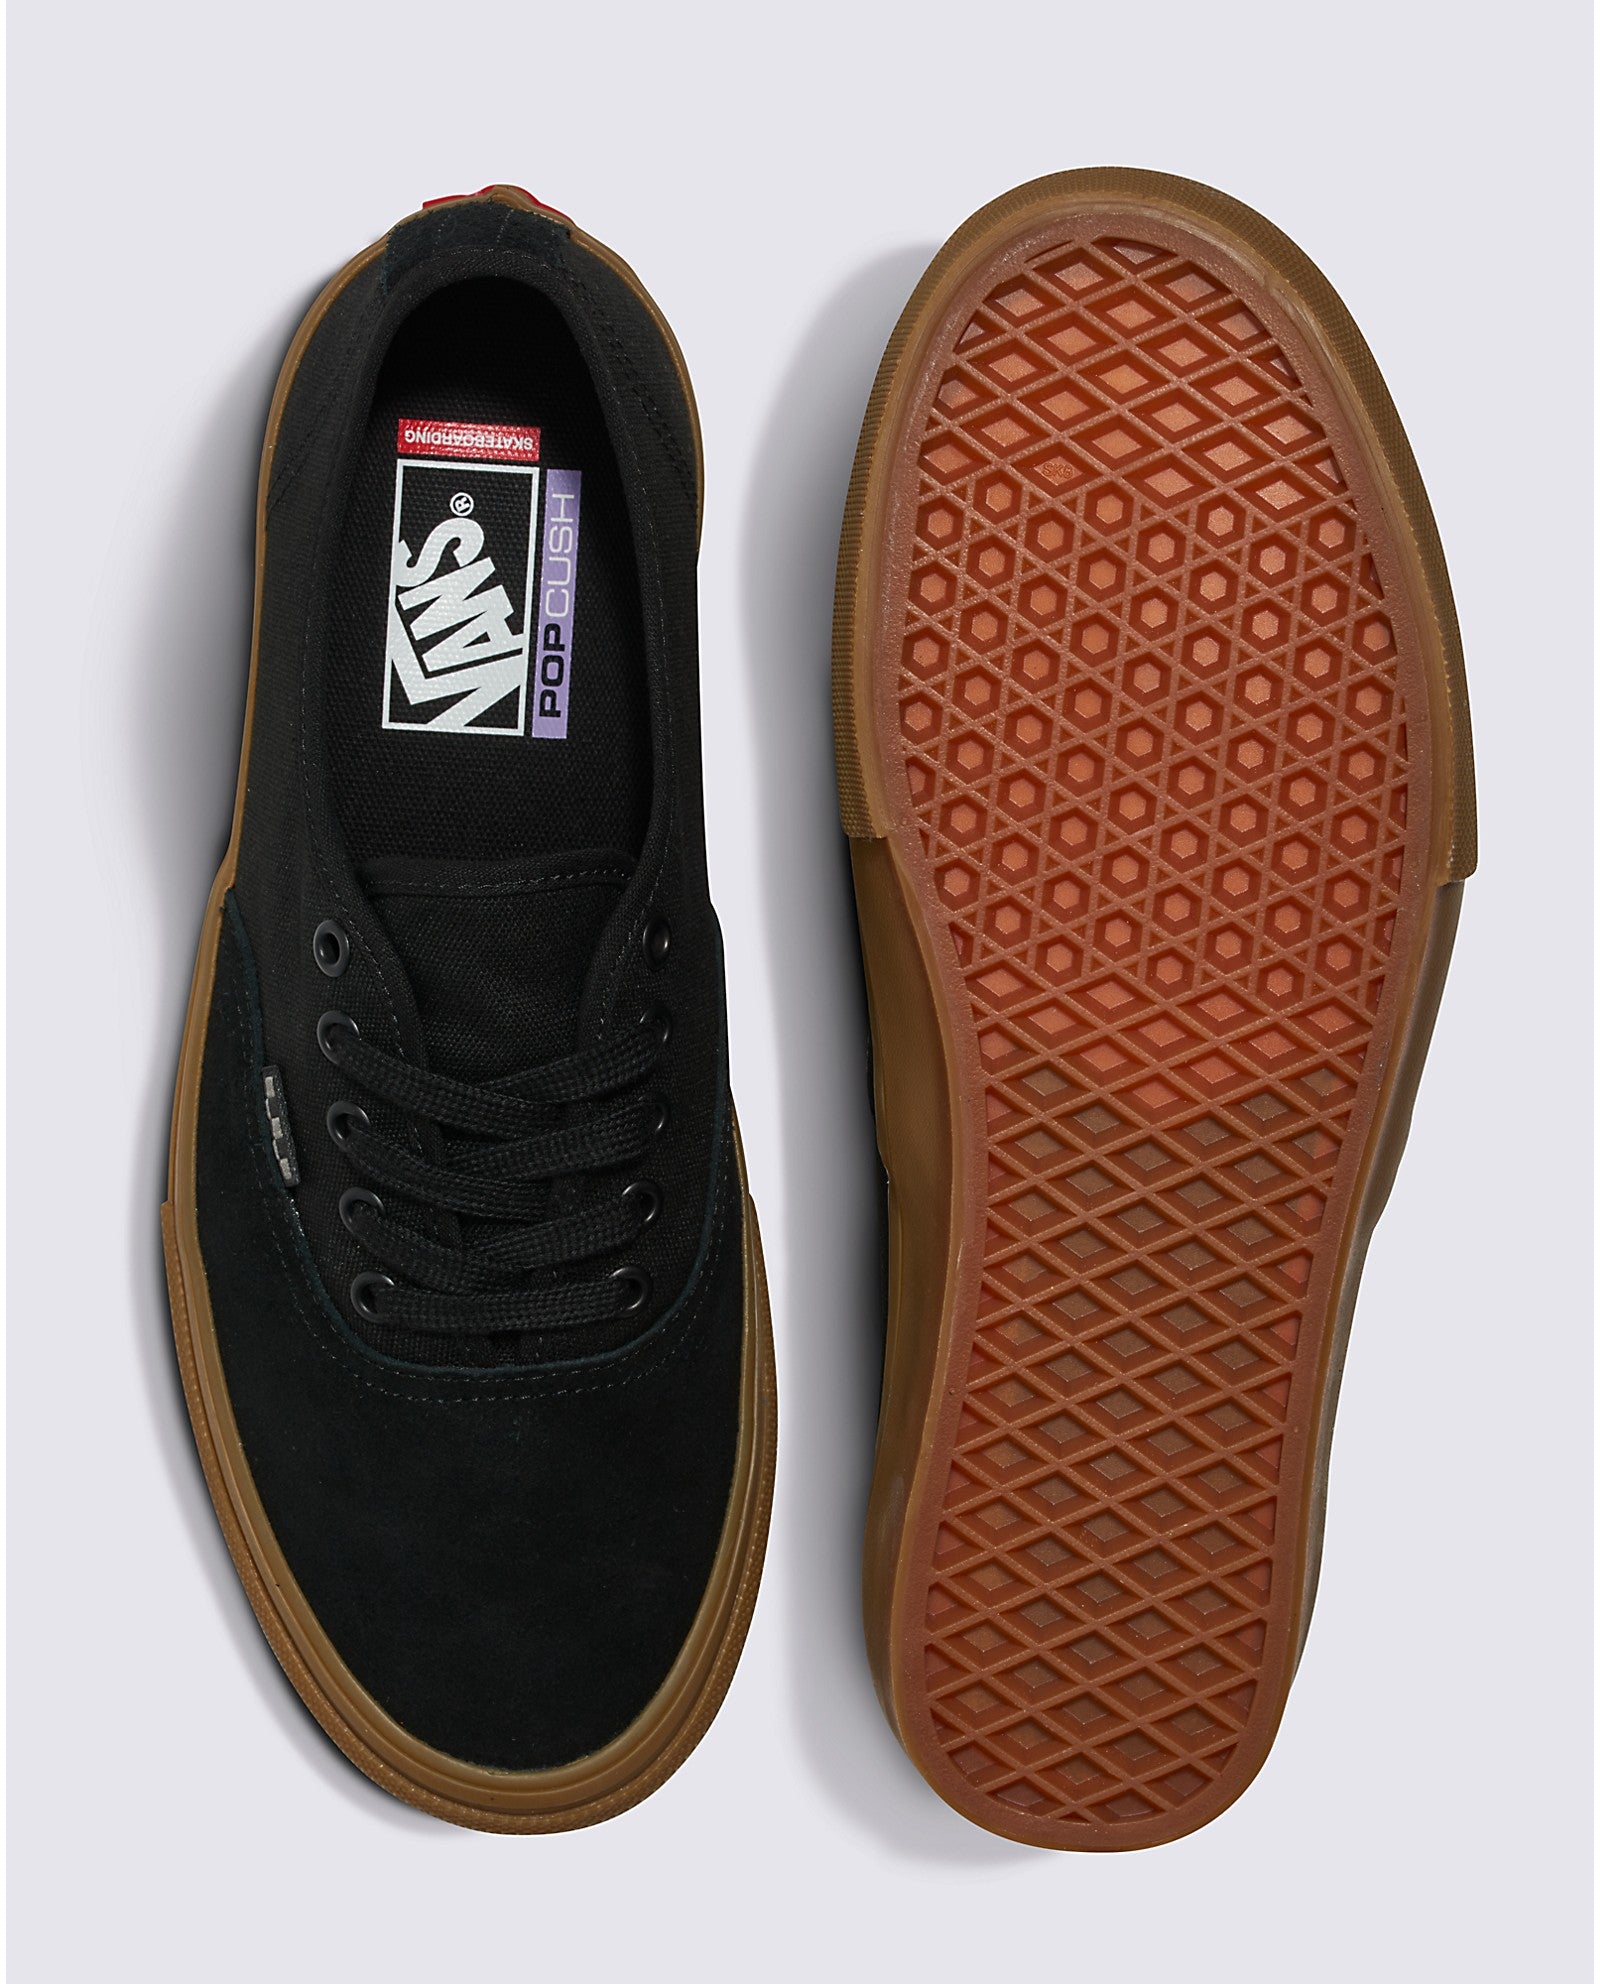 Black/Gum Vans Skate Authentic Skate Shoe Top/Bottom